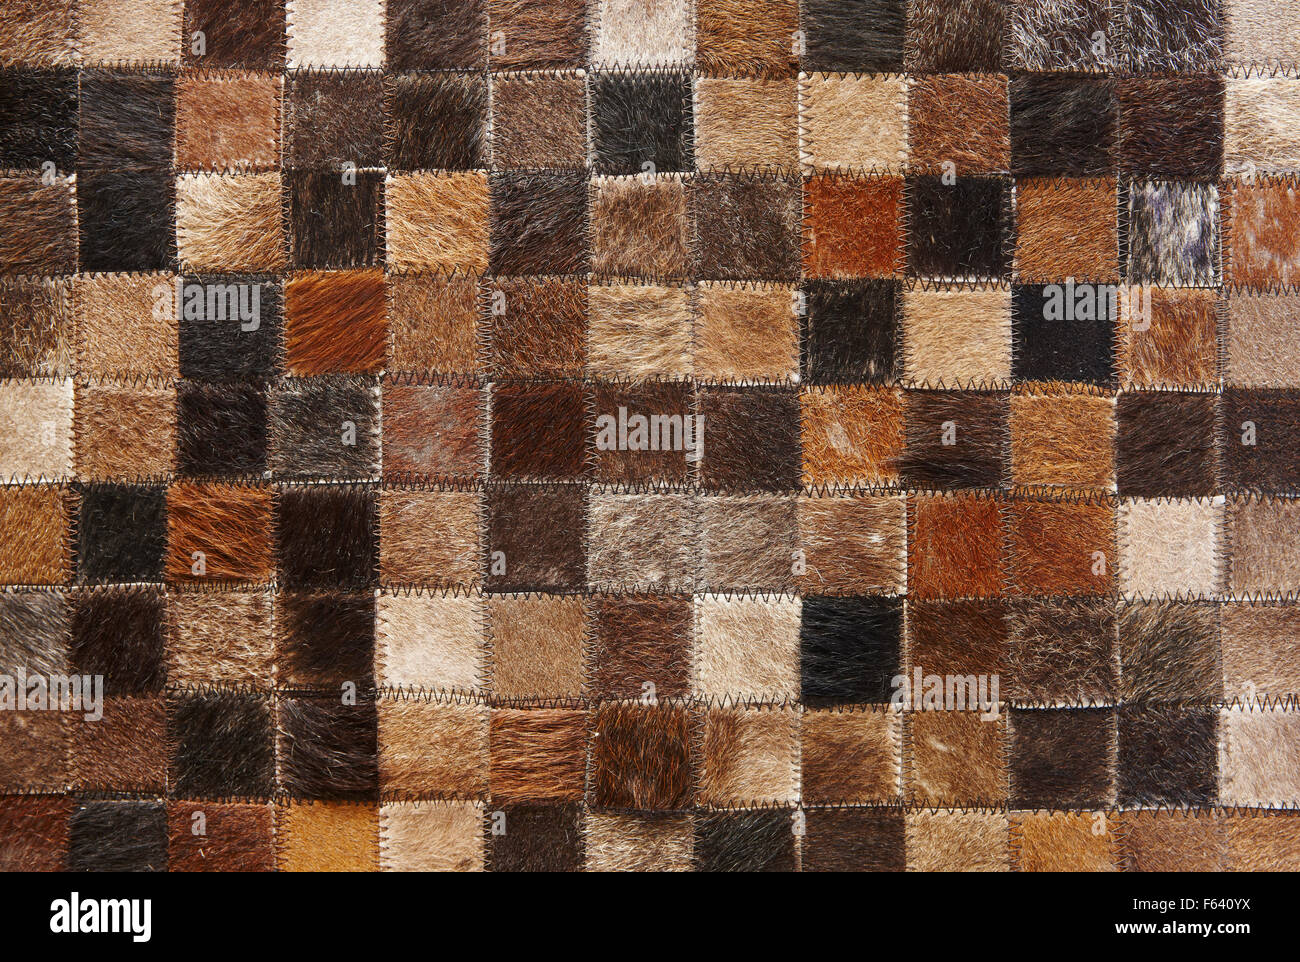 Needlework background of skin squares with animal hair Stock Photo